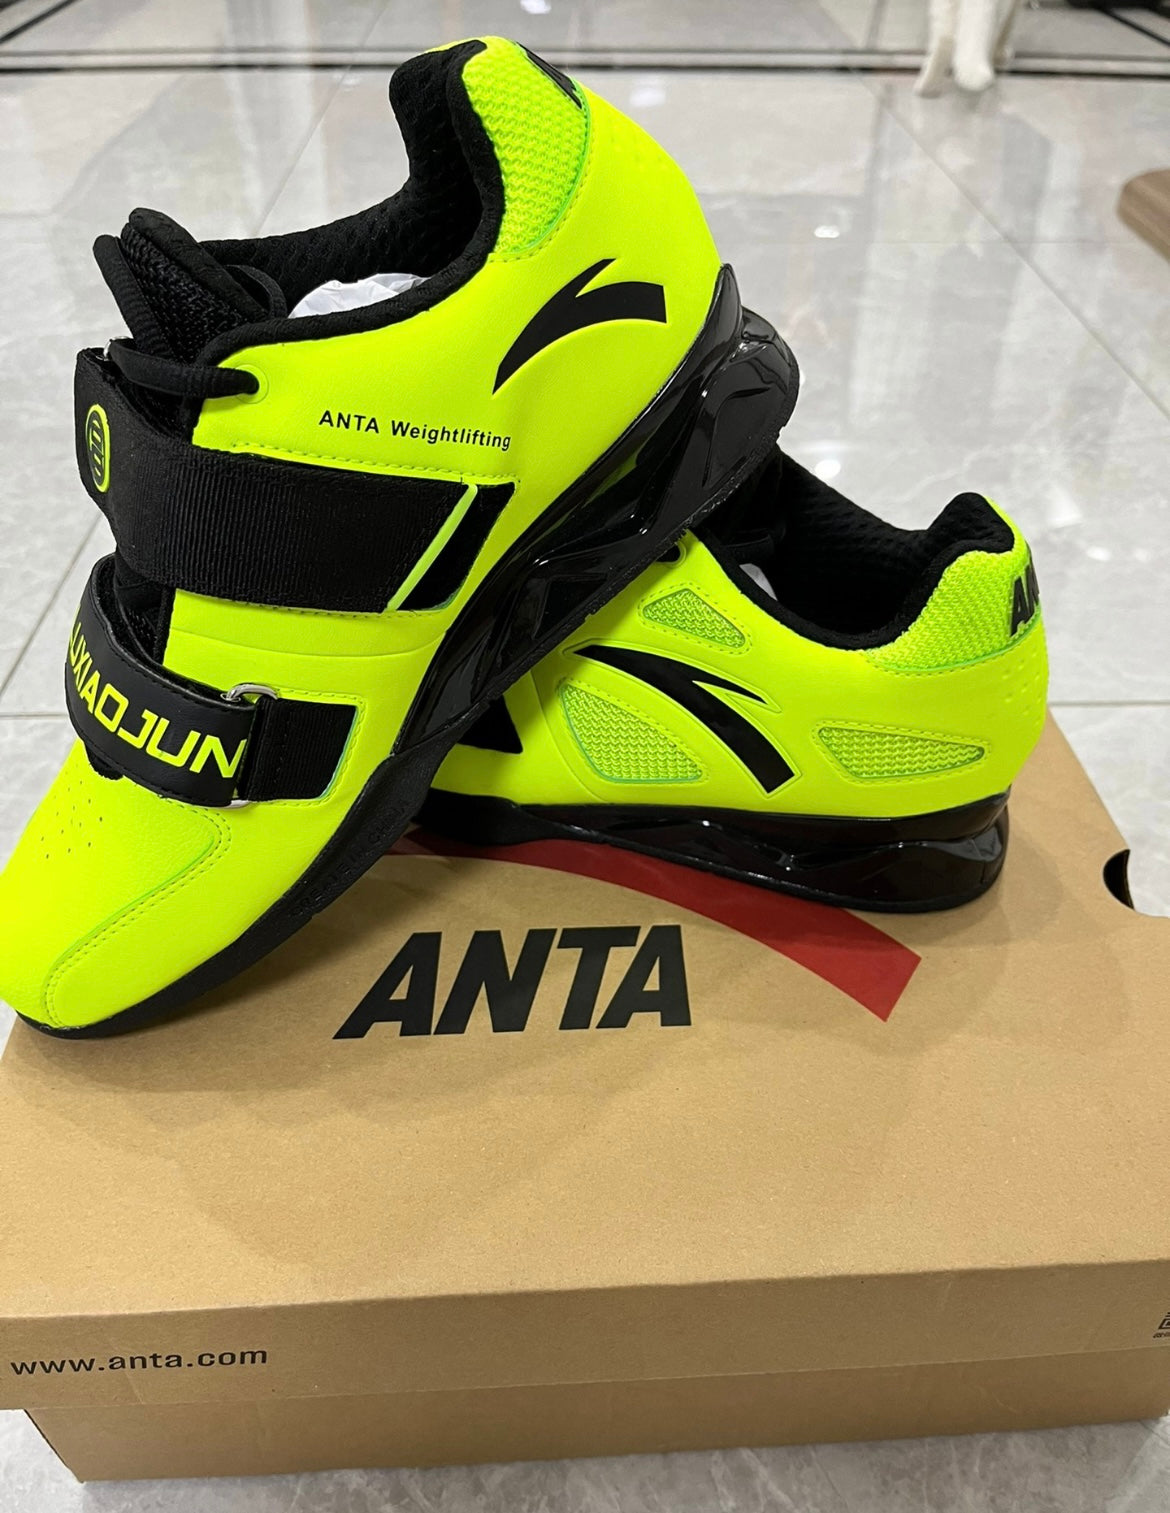 Lu Xiaojun x Anta 1 National Team Competition Training Weightlifting Shoes / Squat Shoes - Green